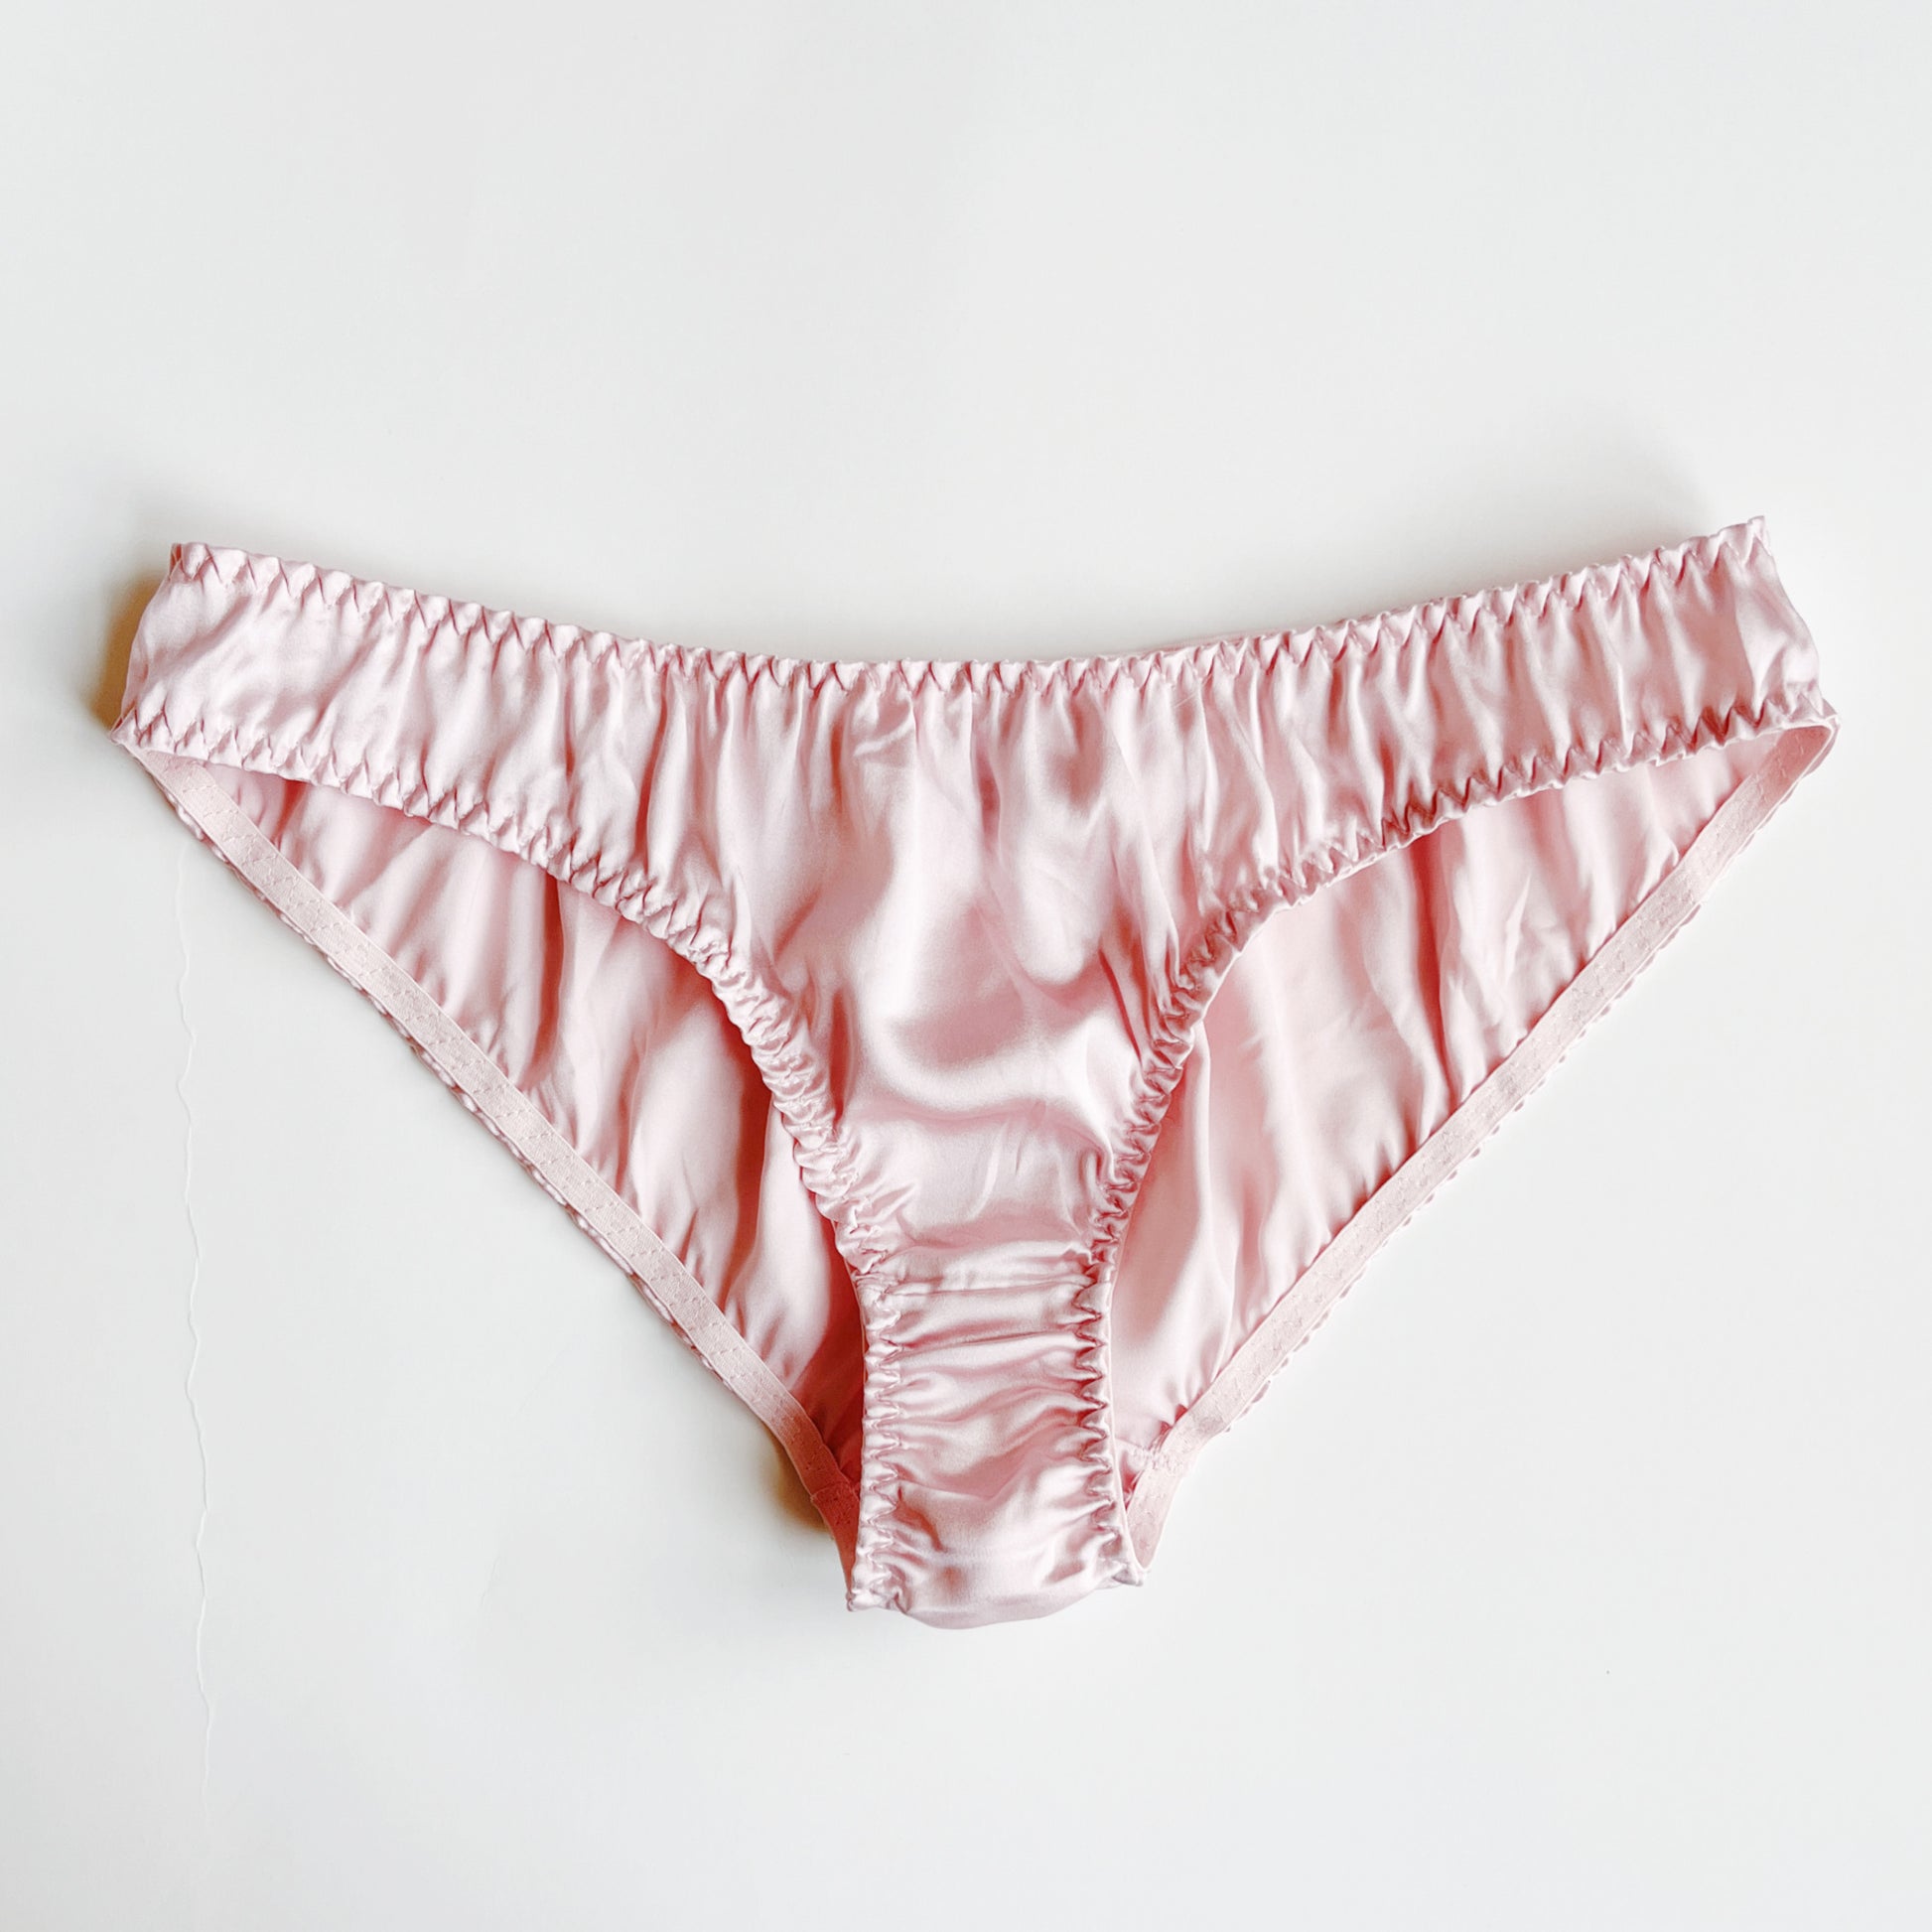 Nylon Panties Cotton Crotch, Nylon Silk Underwear Women